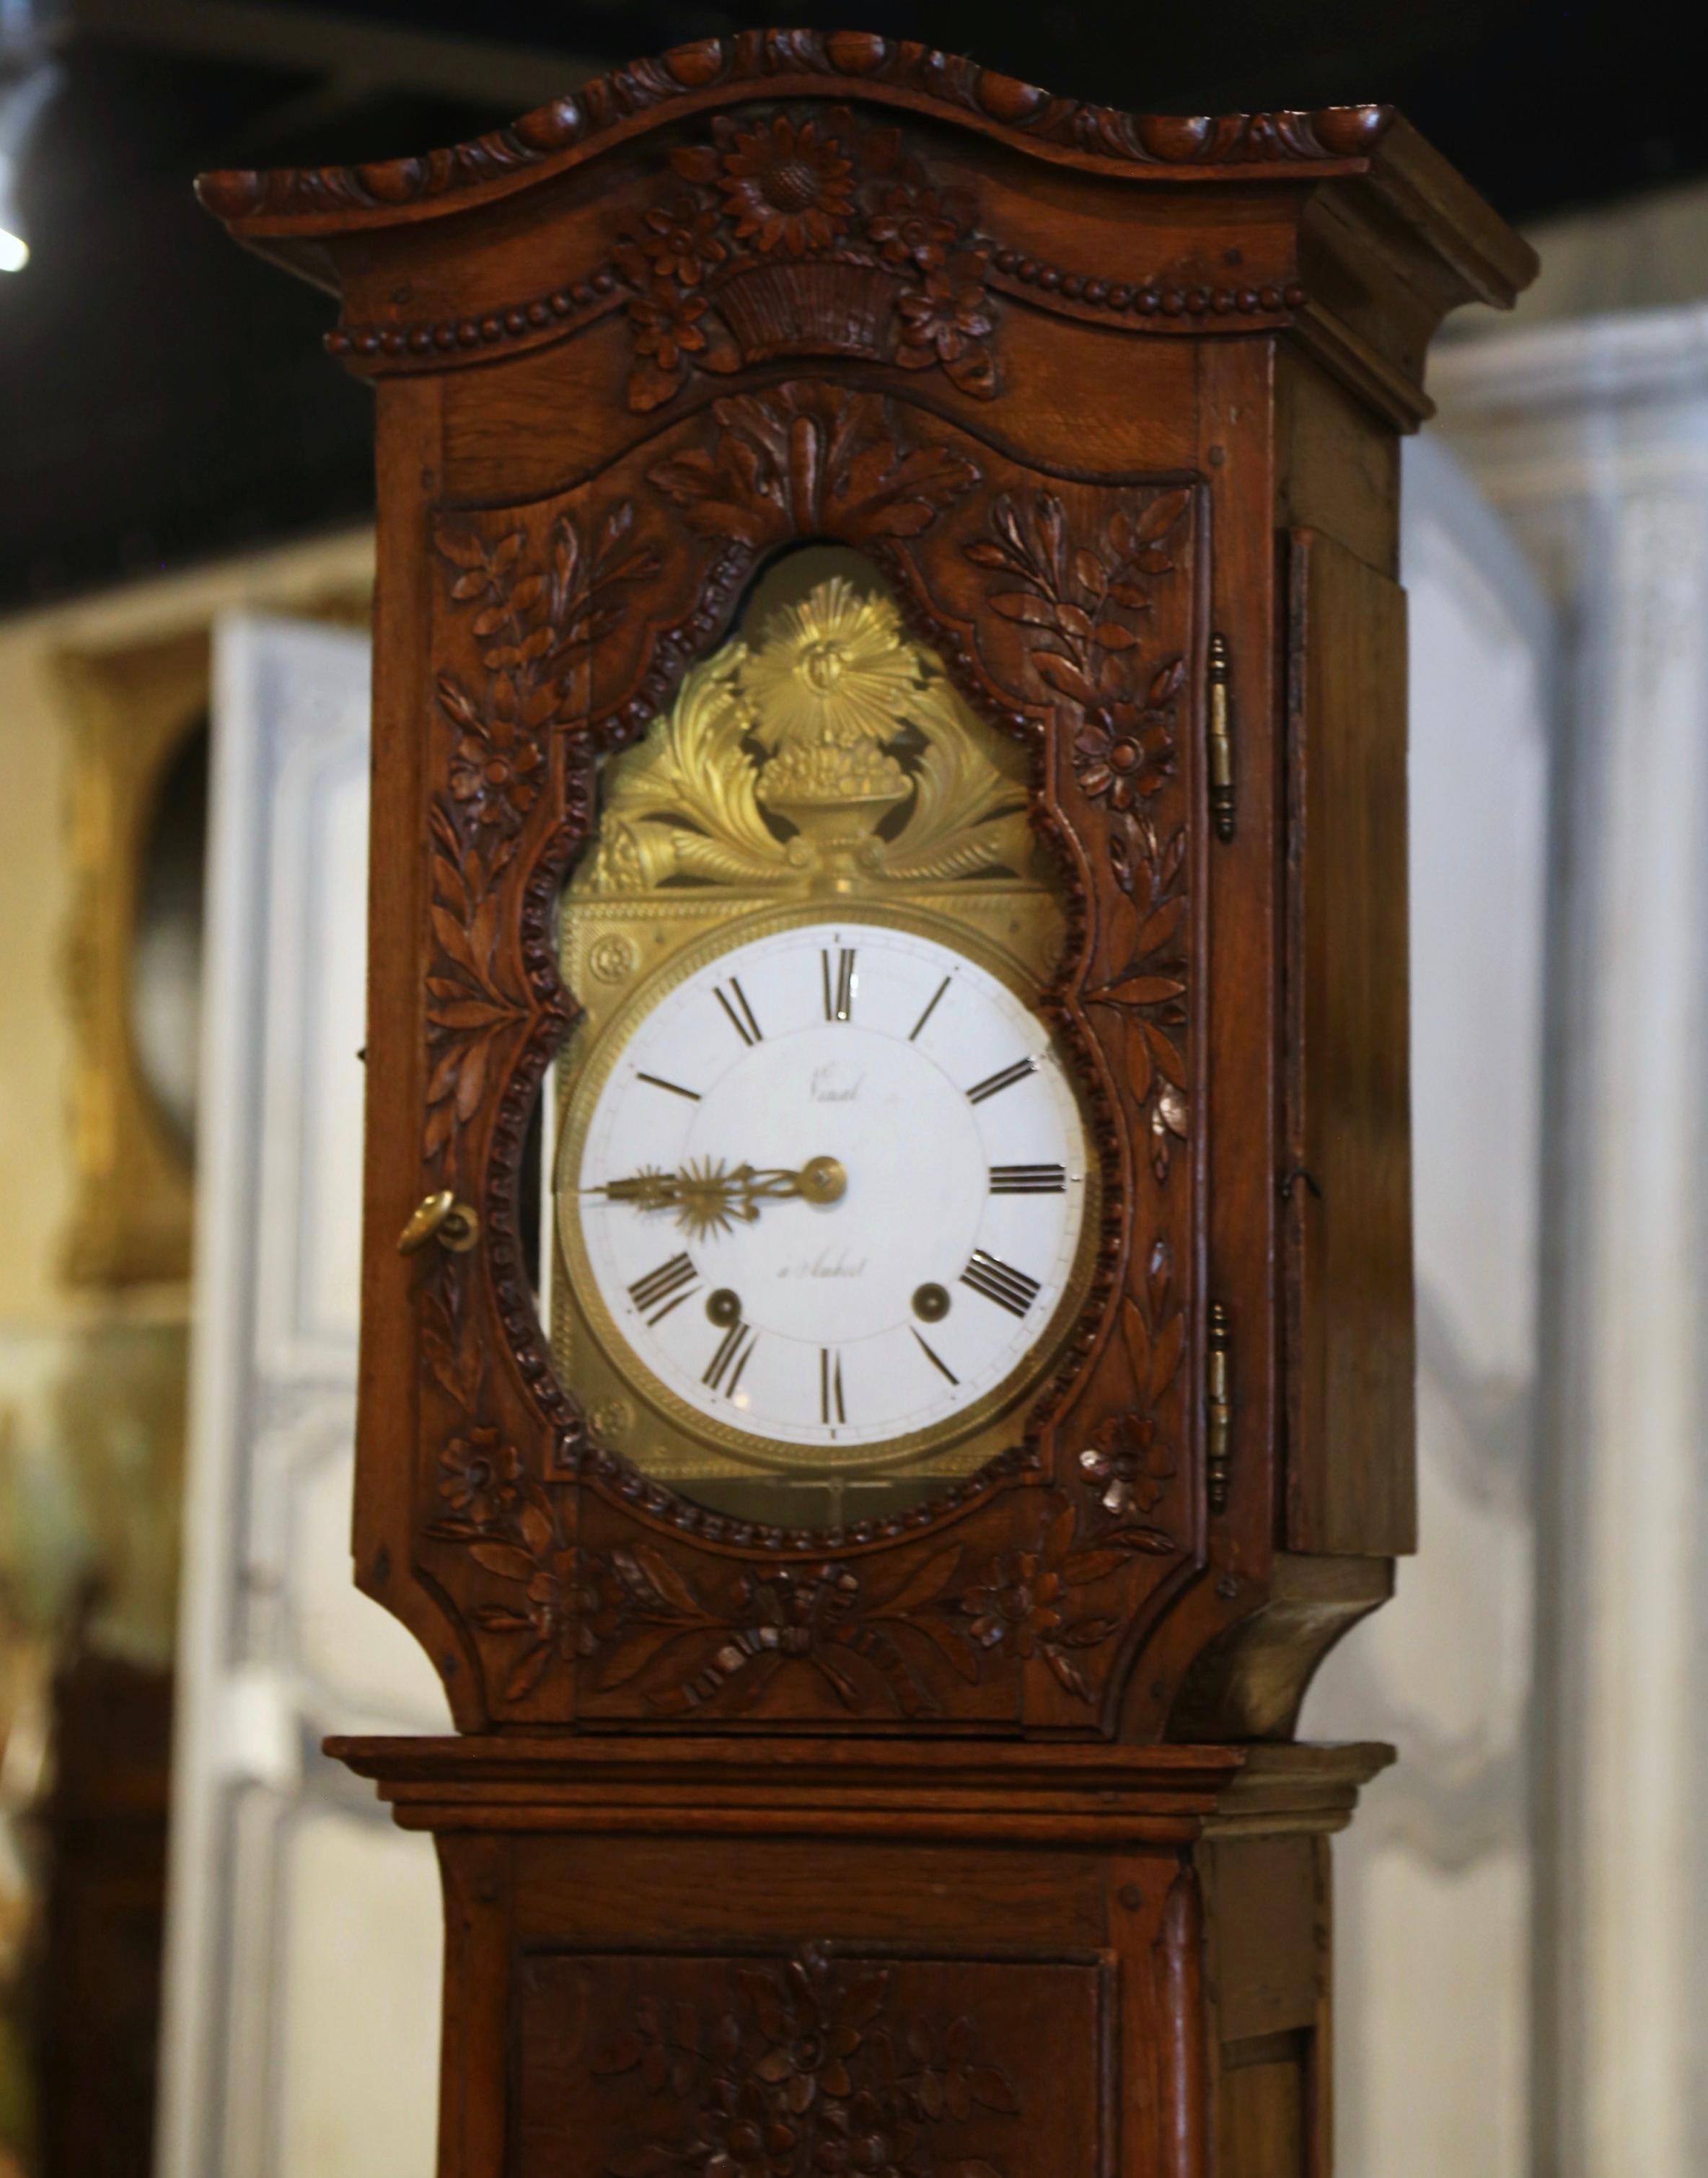 18th century clocks